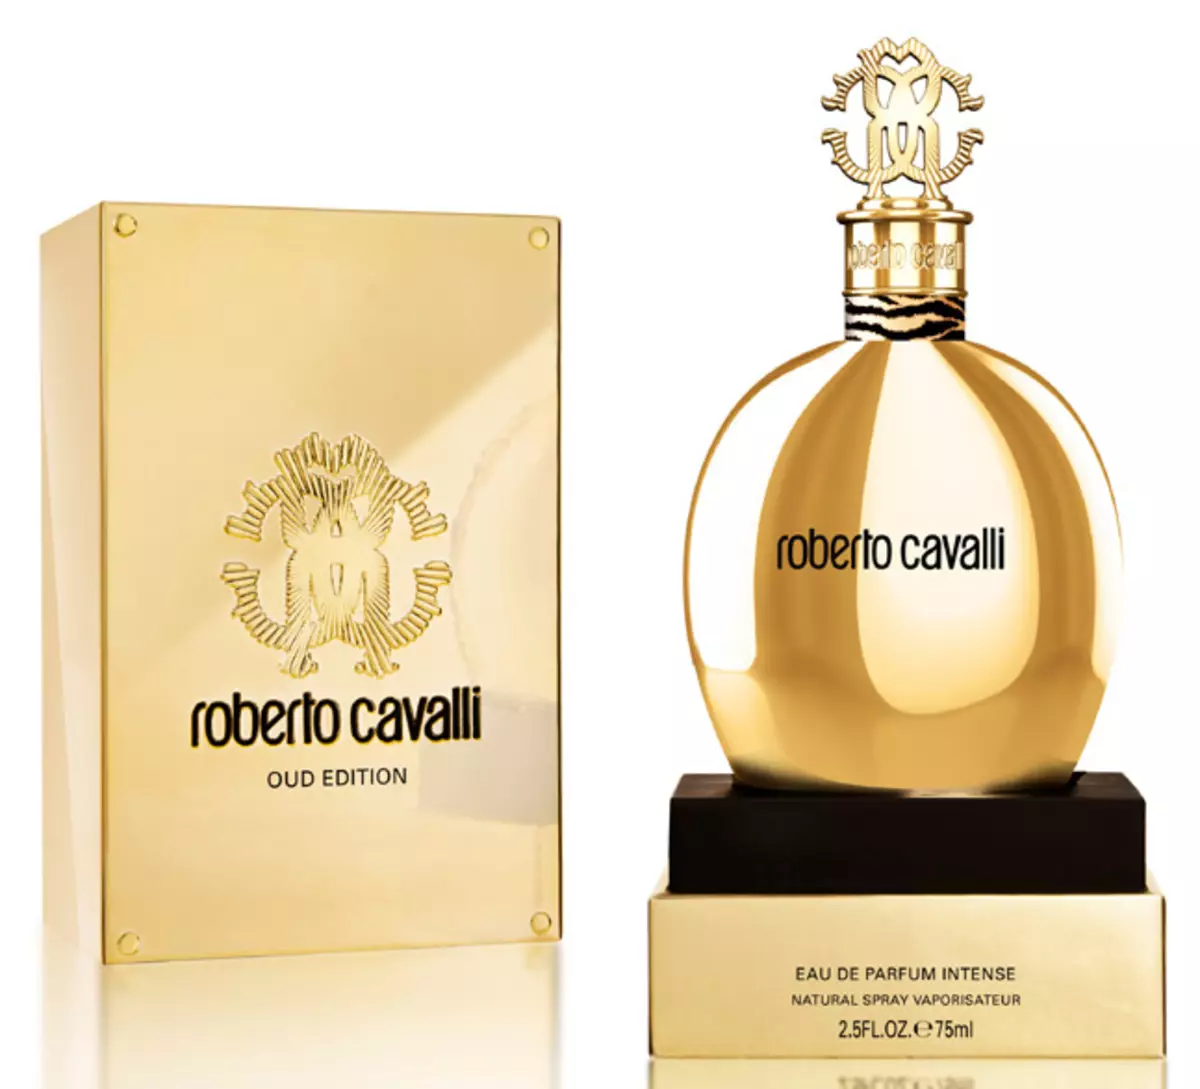 Perfume Roberto Cavalli: Perfume wanita, hanya Cavalli dan air tandas lain, Aromas Roberto Cavalli Eau de Parfum, Paradiso dan Acqua 25296_17